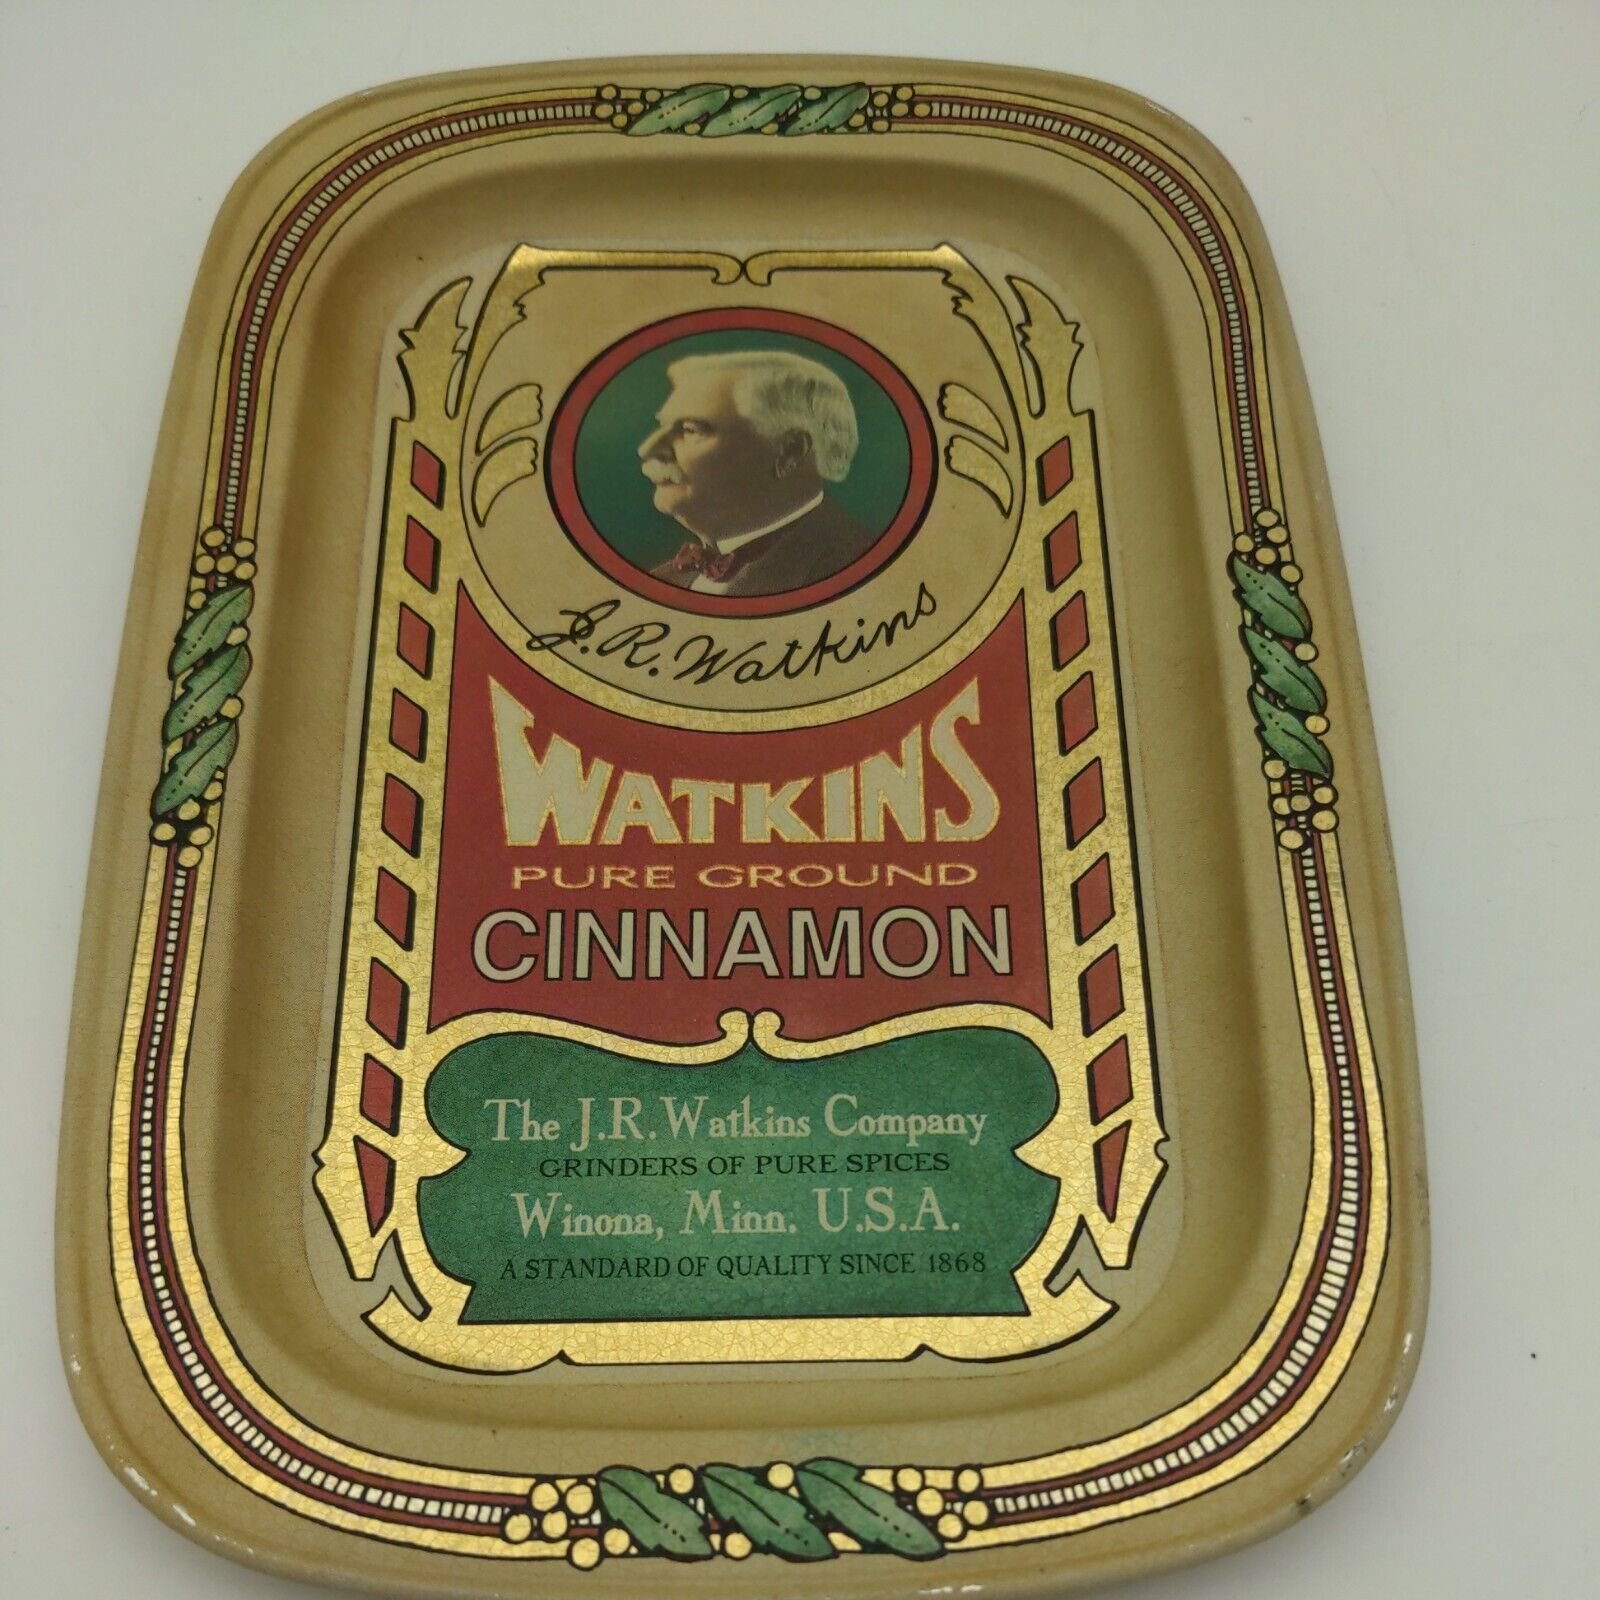 Watkins Pure Ground Cinnamon Heritage Tin Tray 125th Anniversary